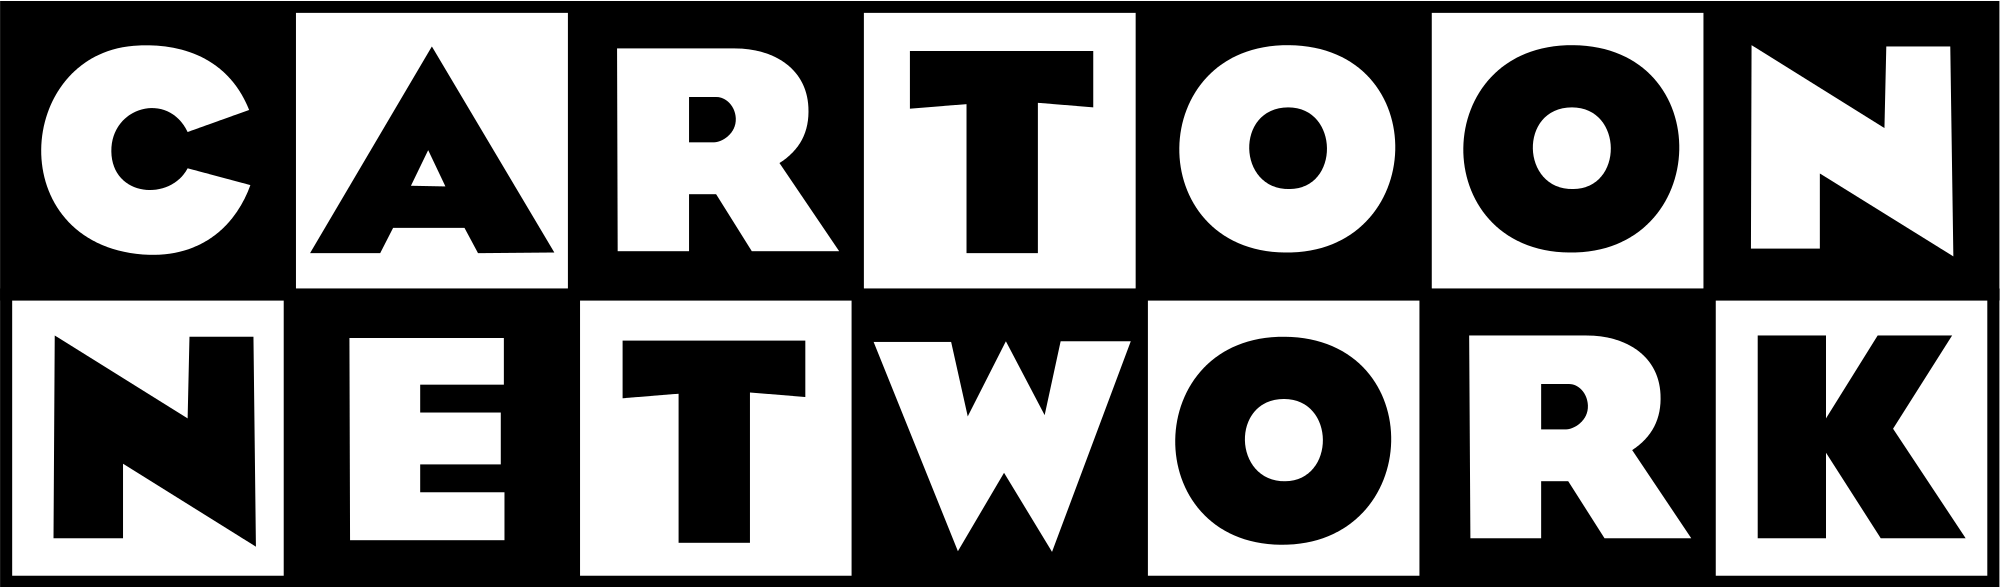 Cartoon Network 2000 Logo - File:Cartoon Network 1992 logo.svg - Wikimedia Commons